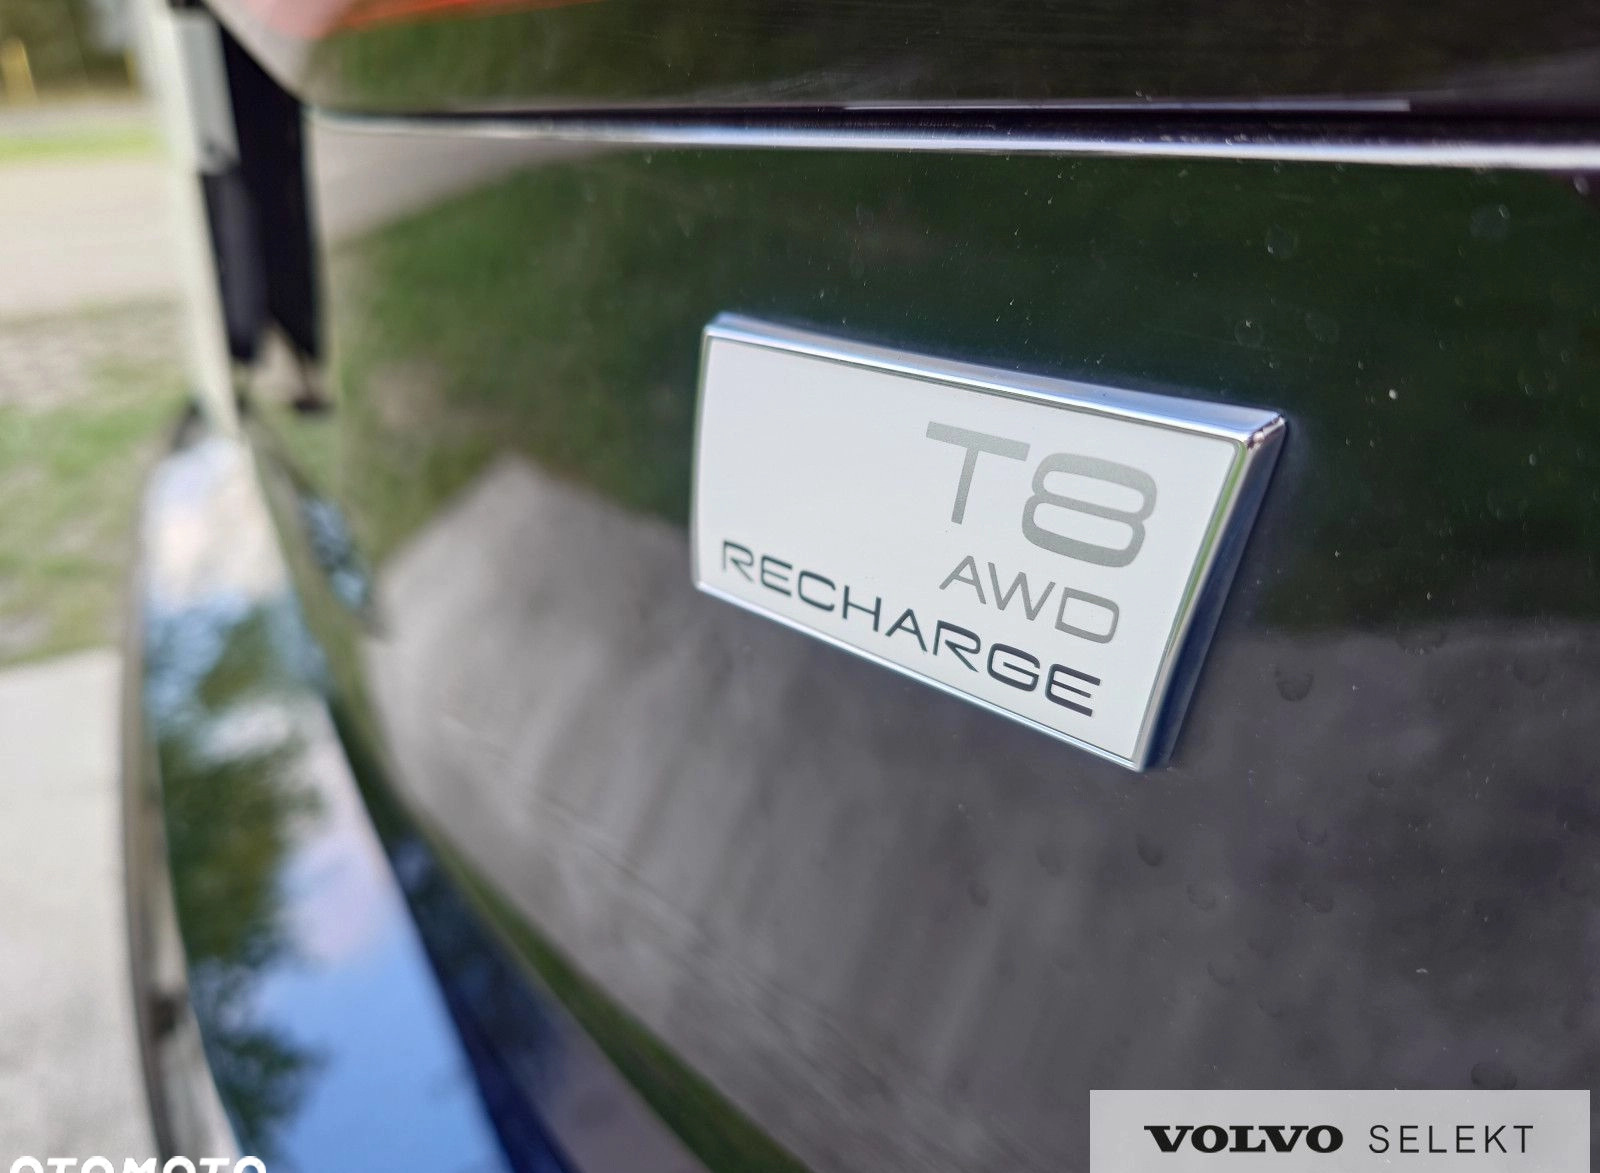 Volvo V90 cena 212900 przebieg: 30930, rok produkcji 2021 z Gorlice małe 781